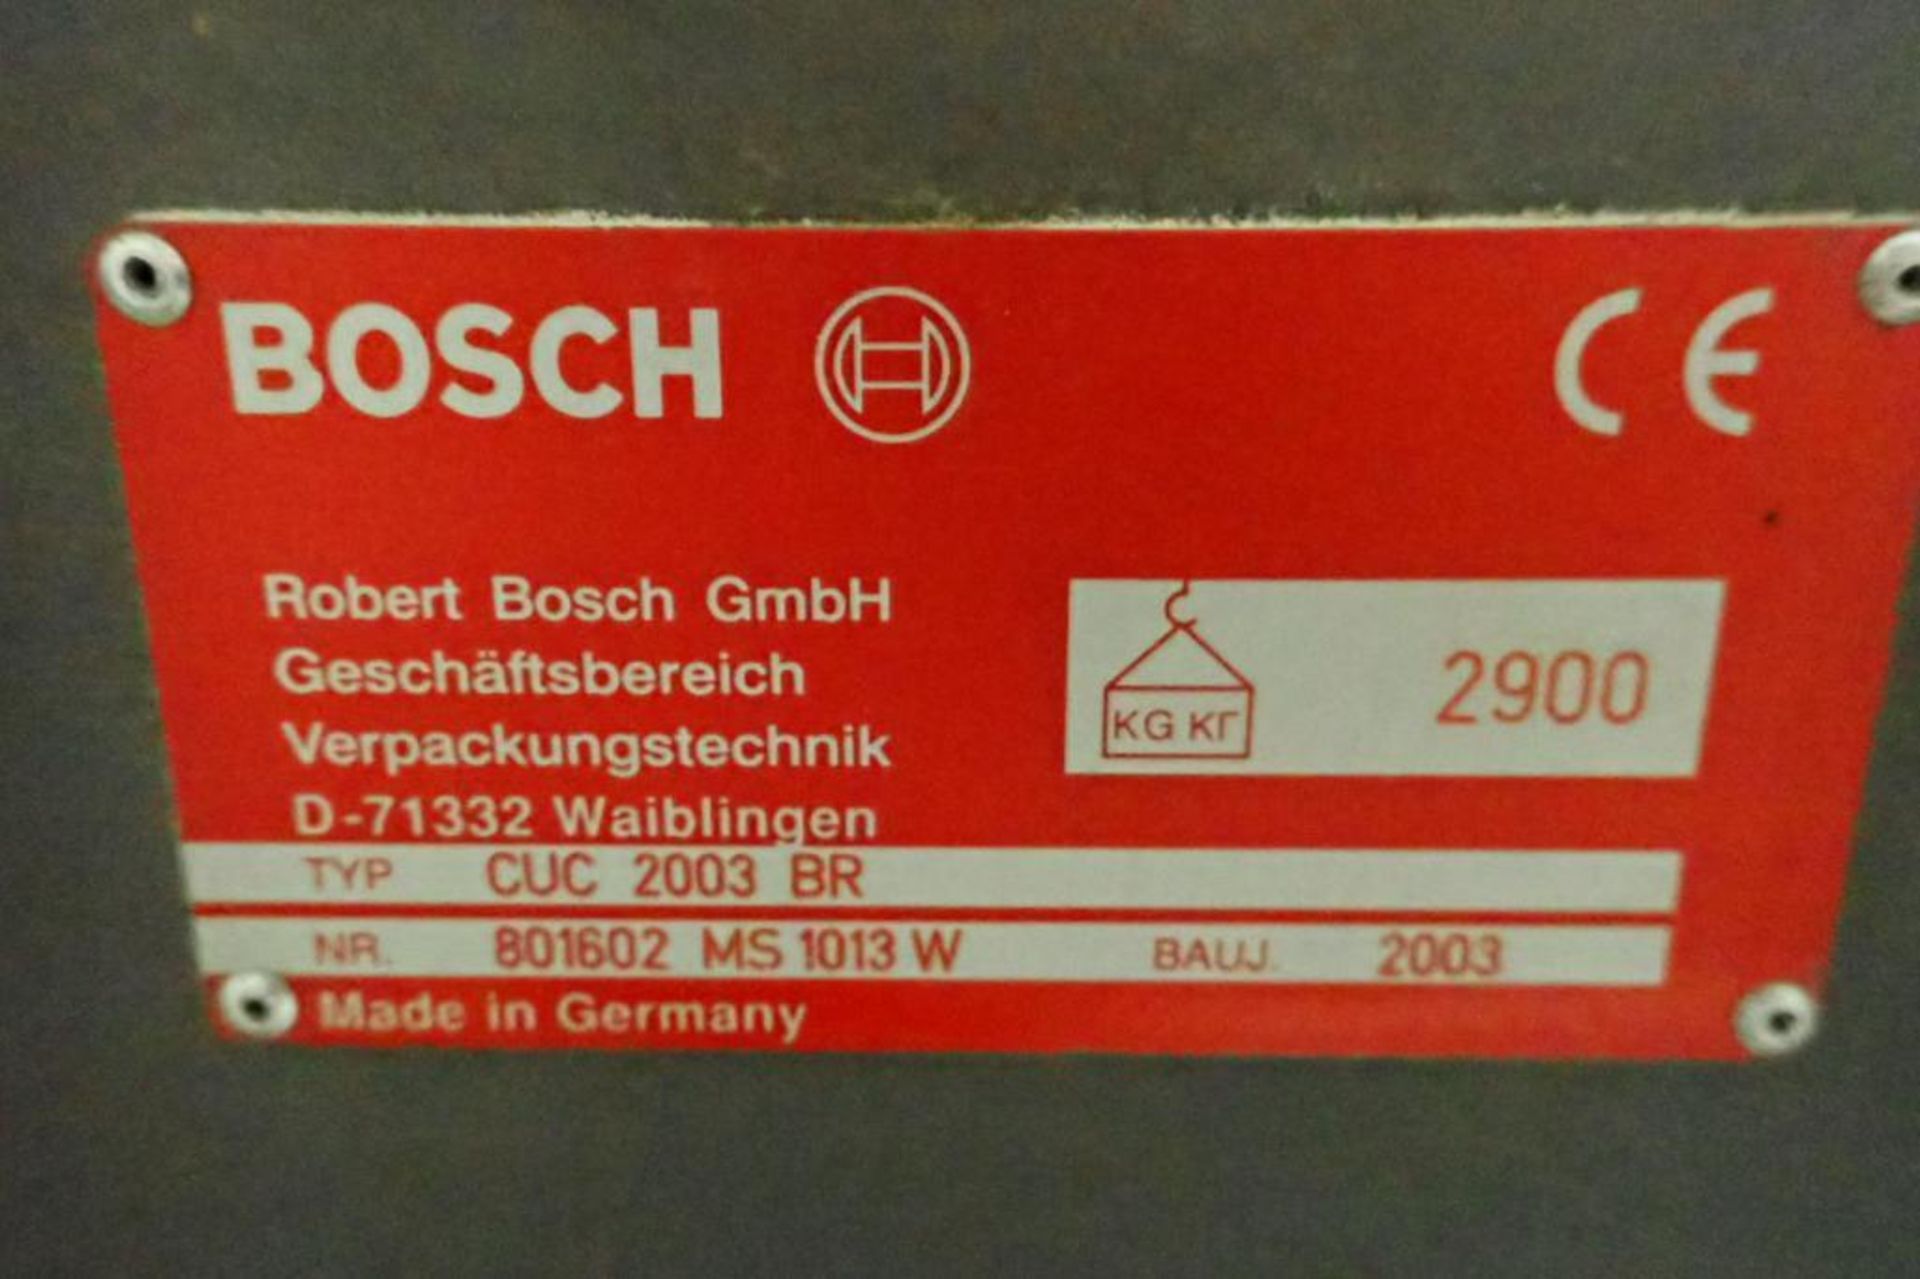 2003 Bosch cartoner, Model CUC 2003 BR, SN 801602 MS 1013 W, pasta inserter, sauce inserter, parts m - Image 2 of 22